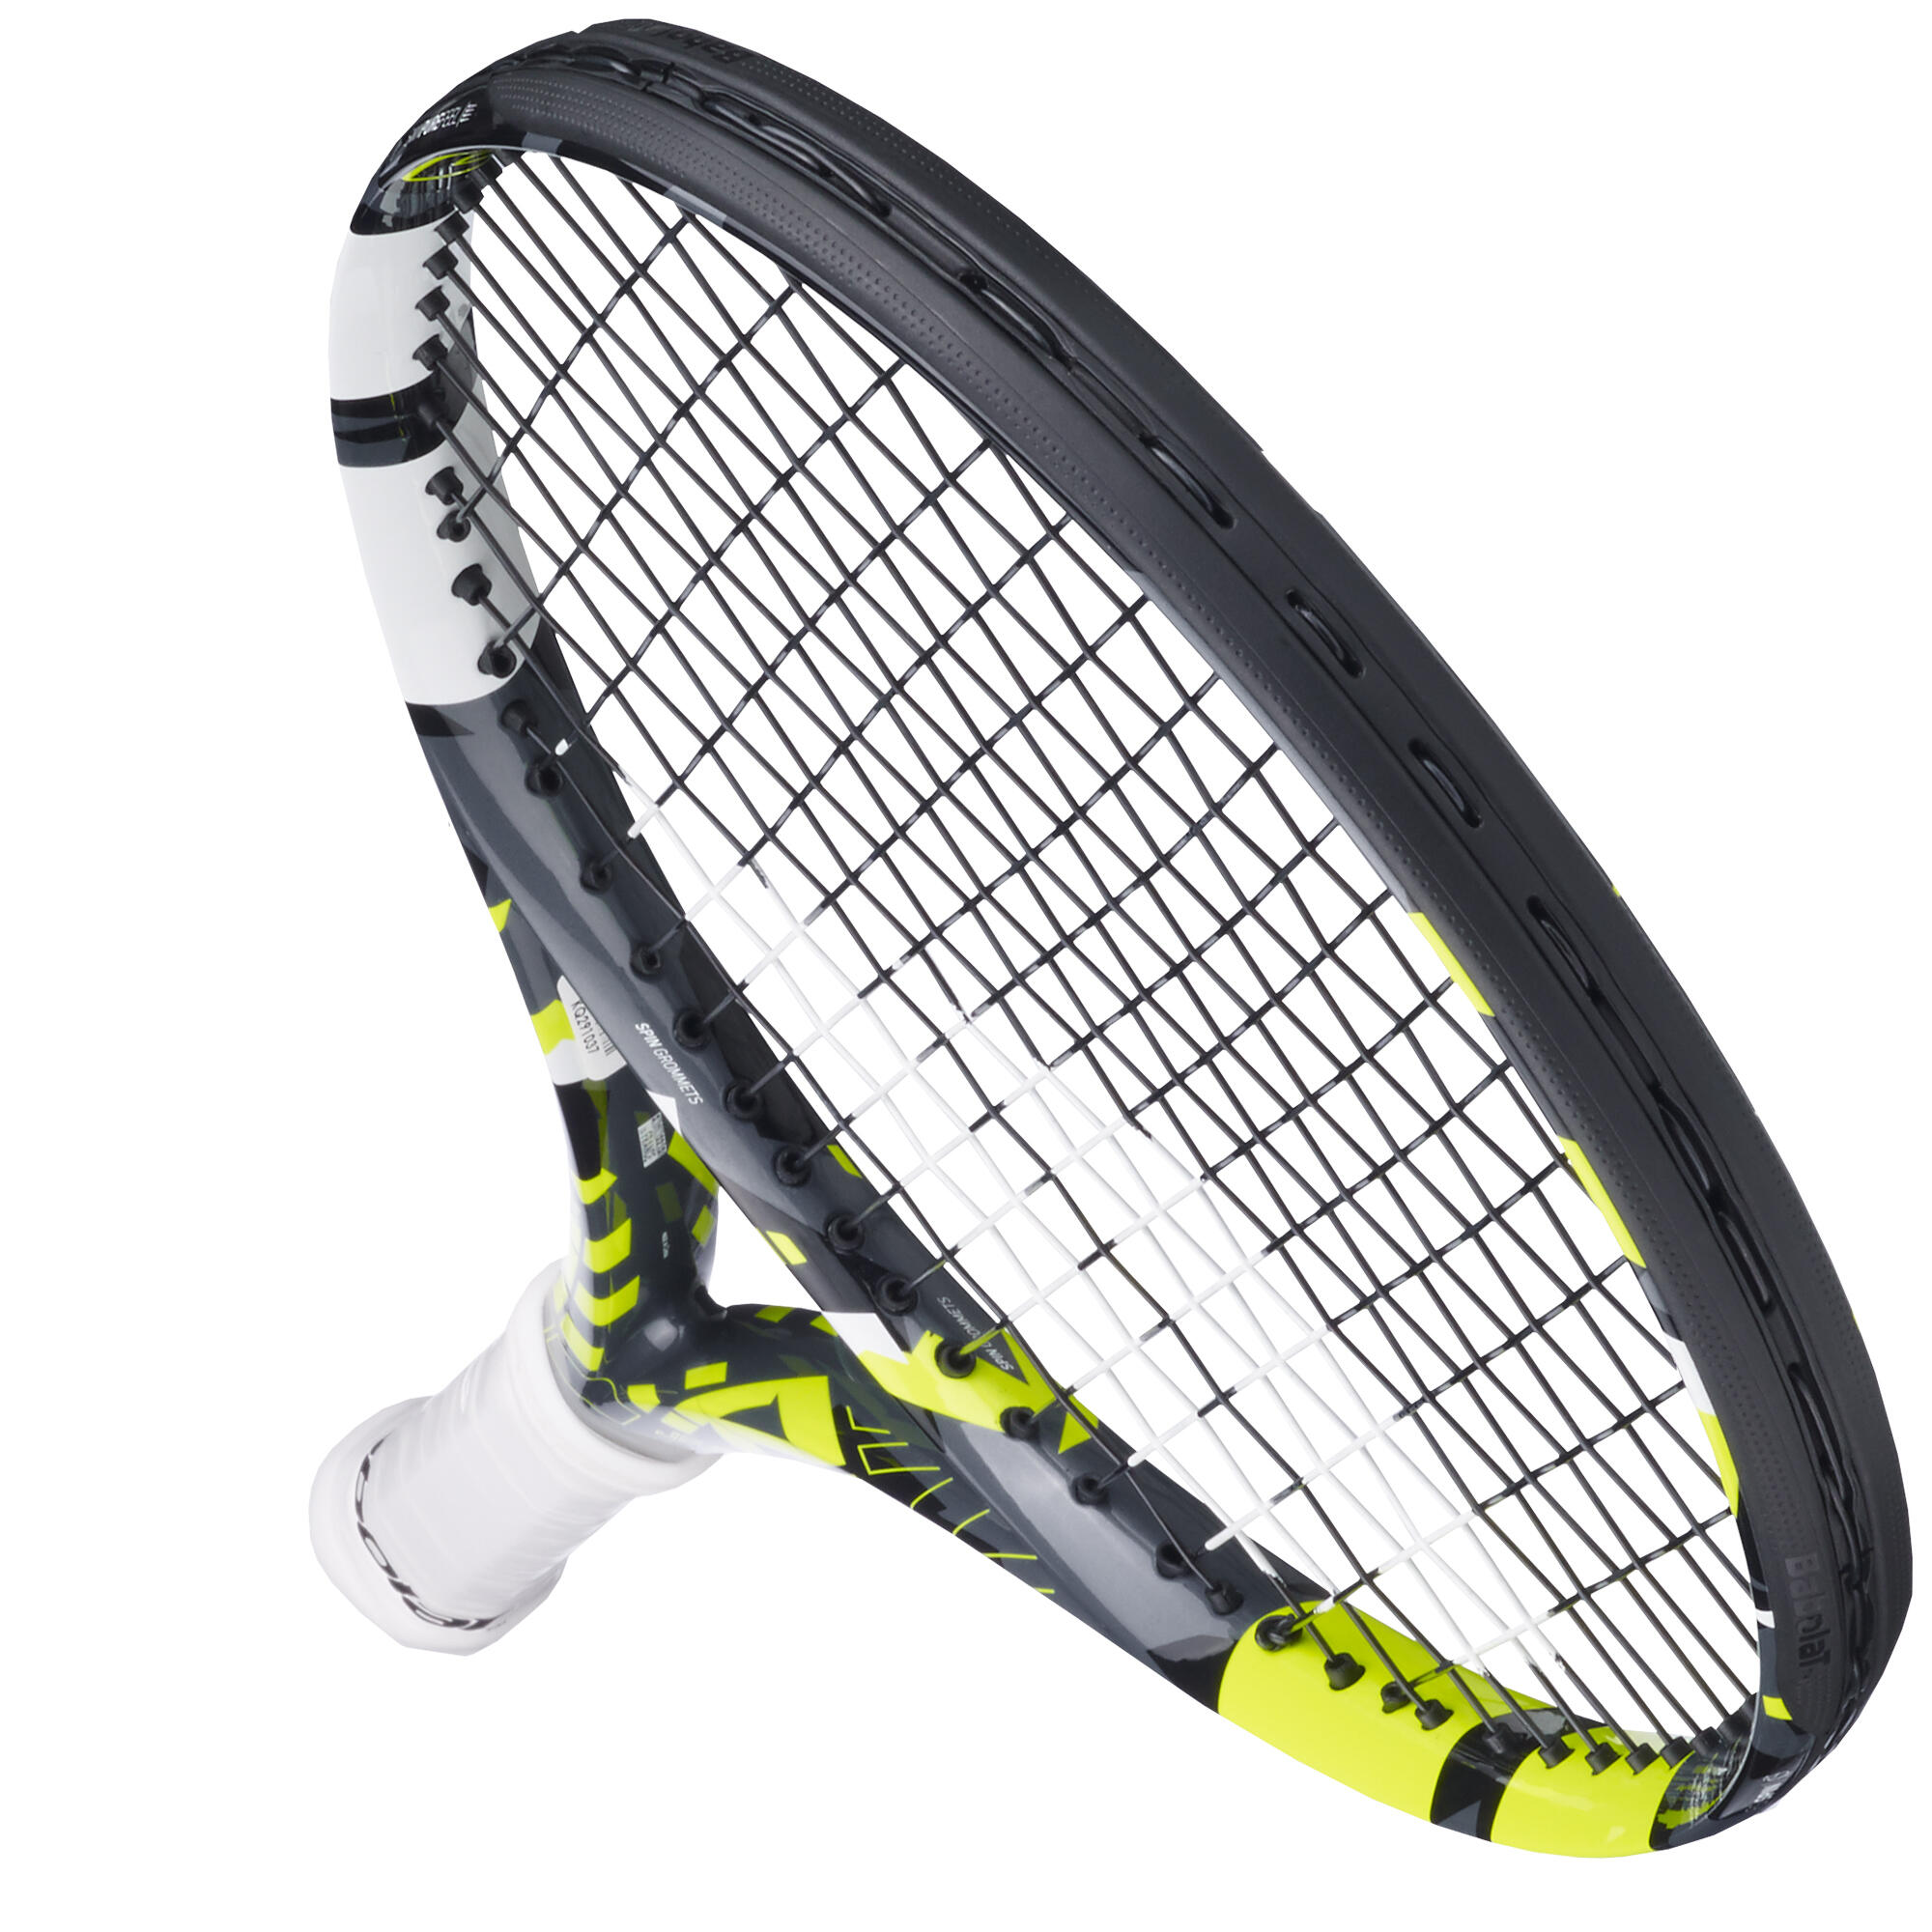 Pure Aero 25 Kids' Tennis Racket - Black/Yellow 7/7